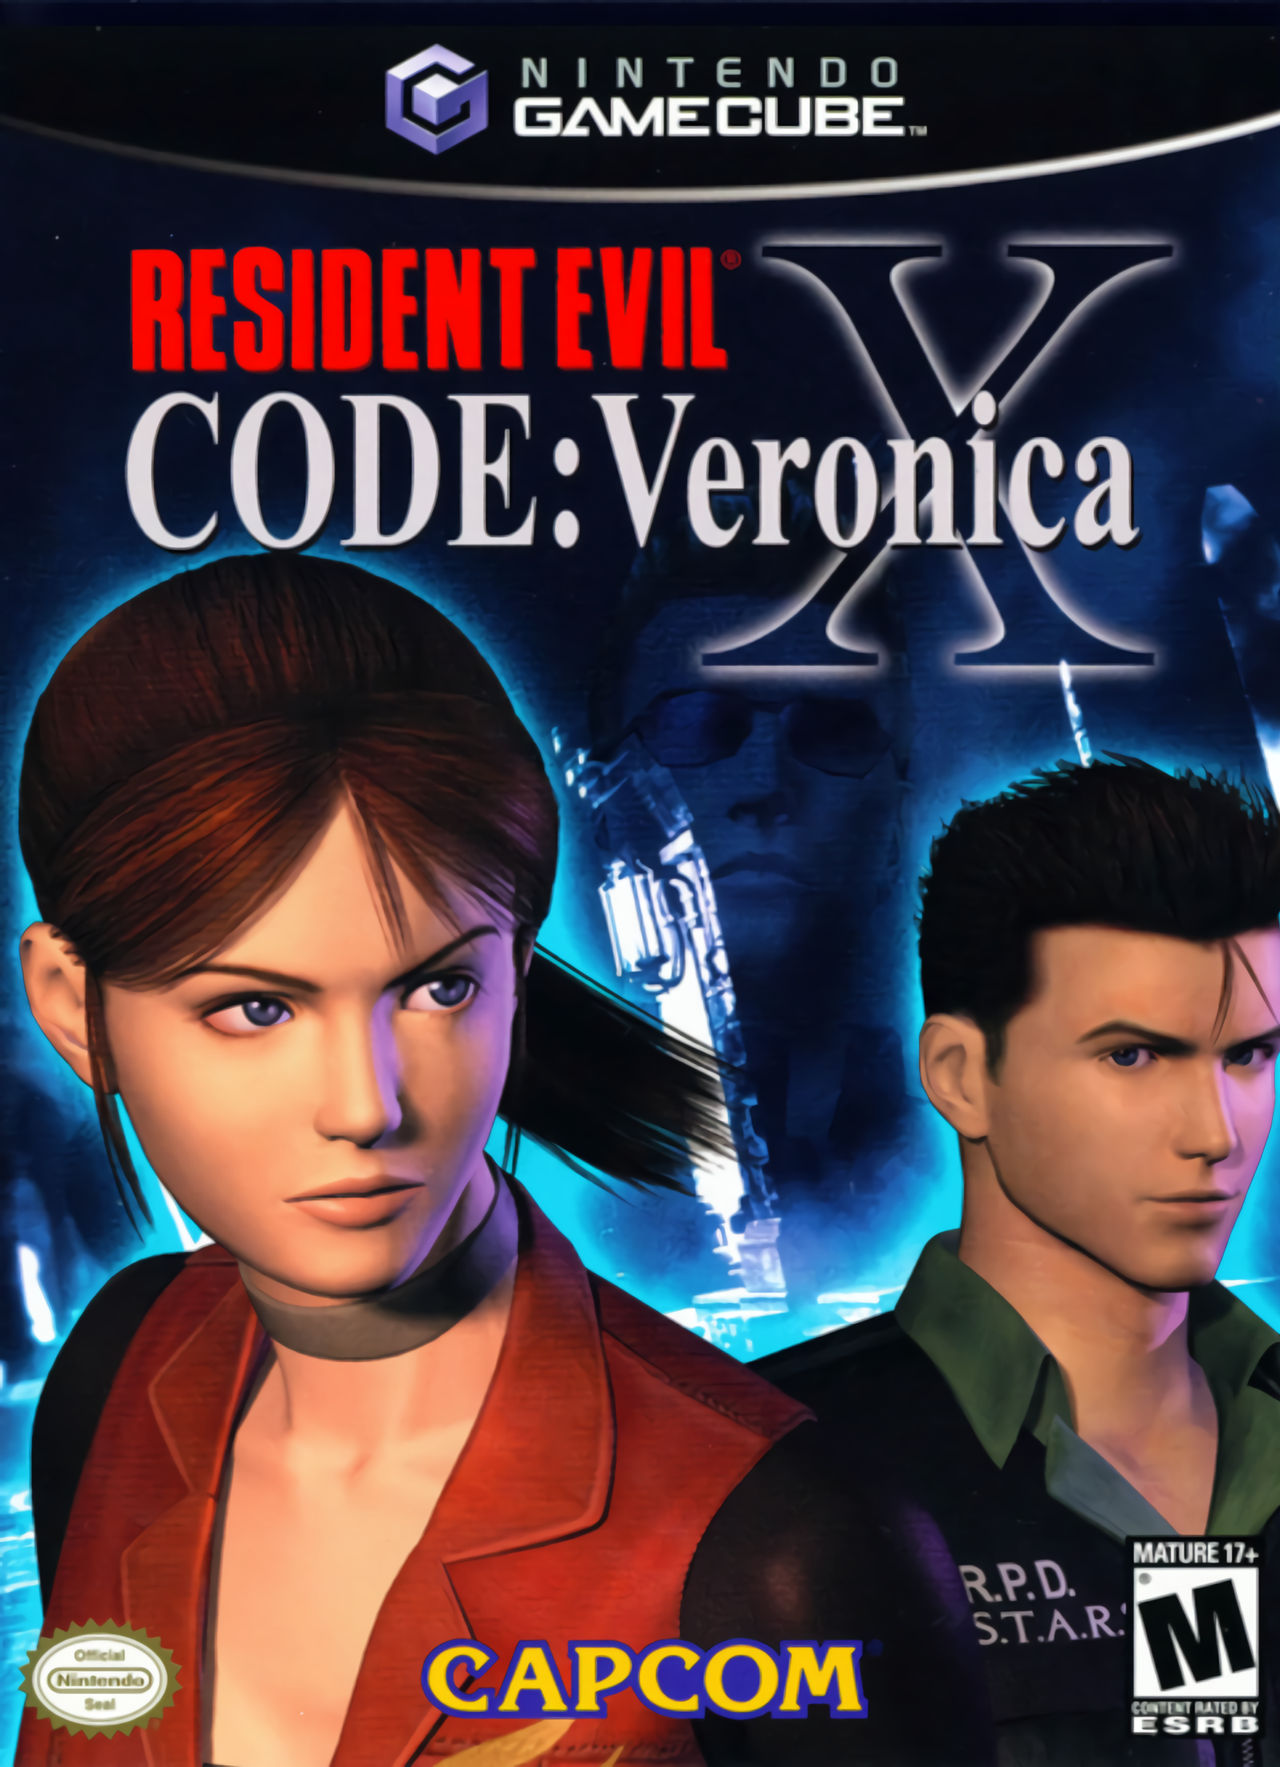 Resident Evil Code Veronica X by Jacob-R-Goulden on DeviantArt